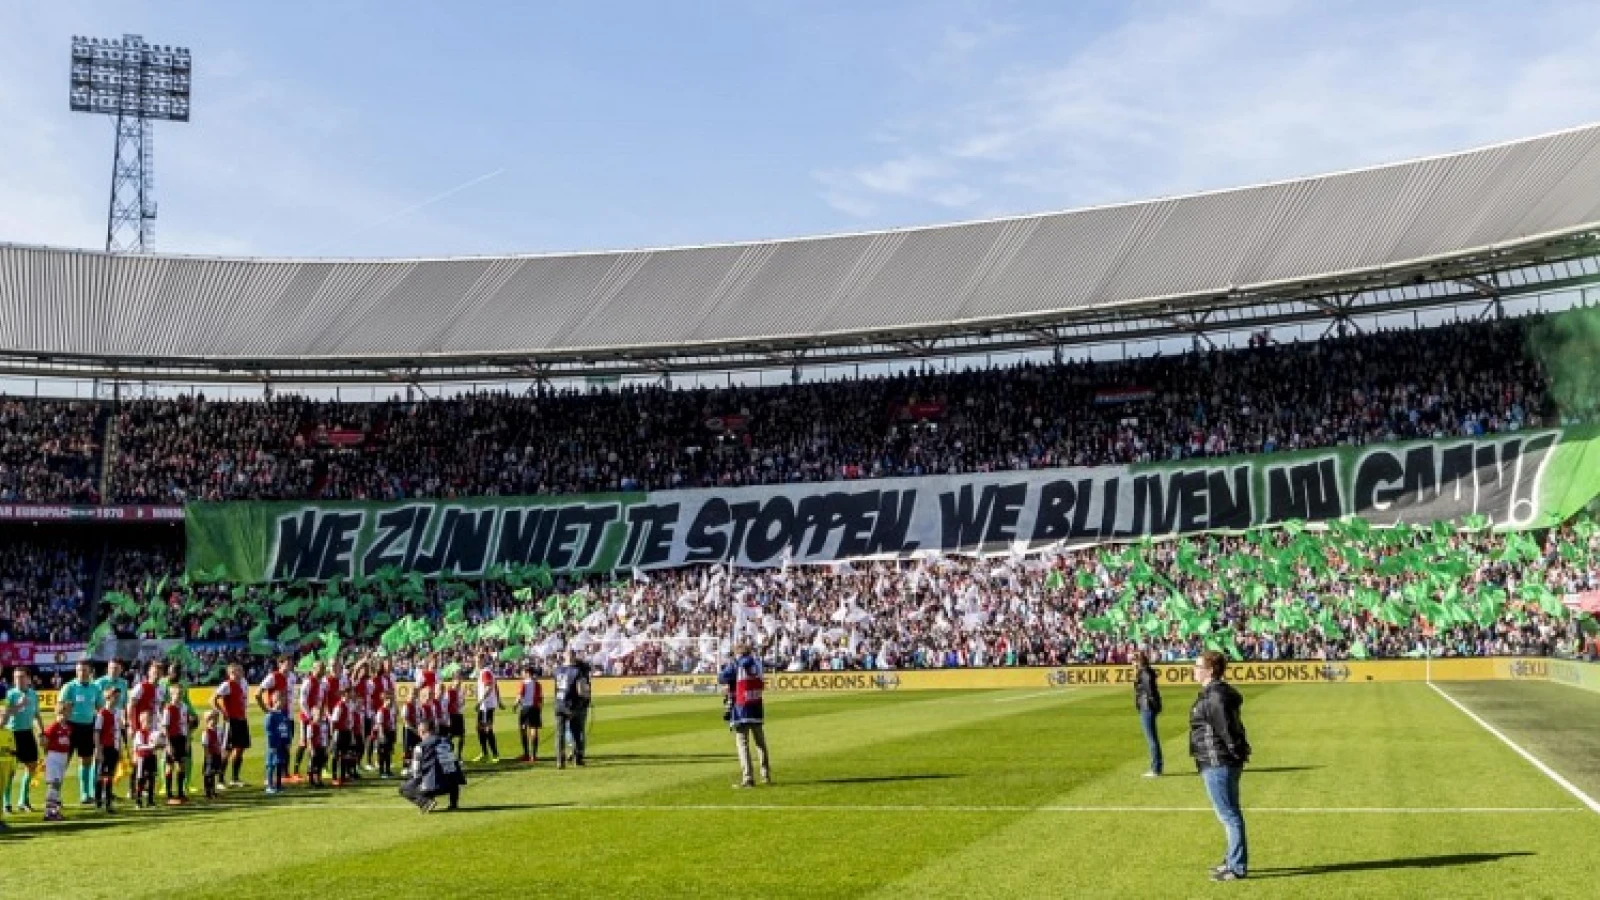 Sfeeractie voor aanvang Feyenoord - PSV in gevaar